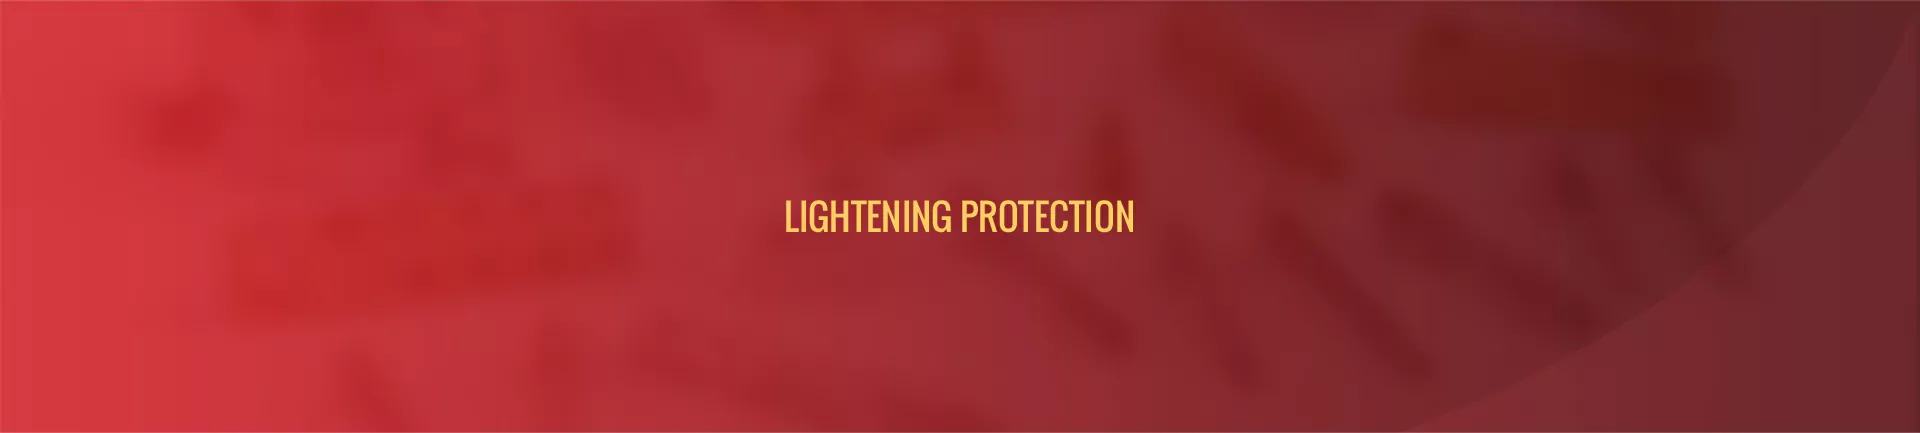 lightening-protection-banner